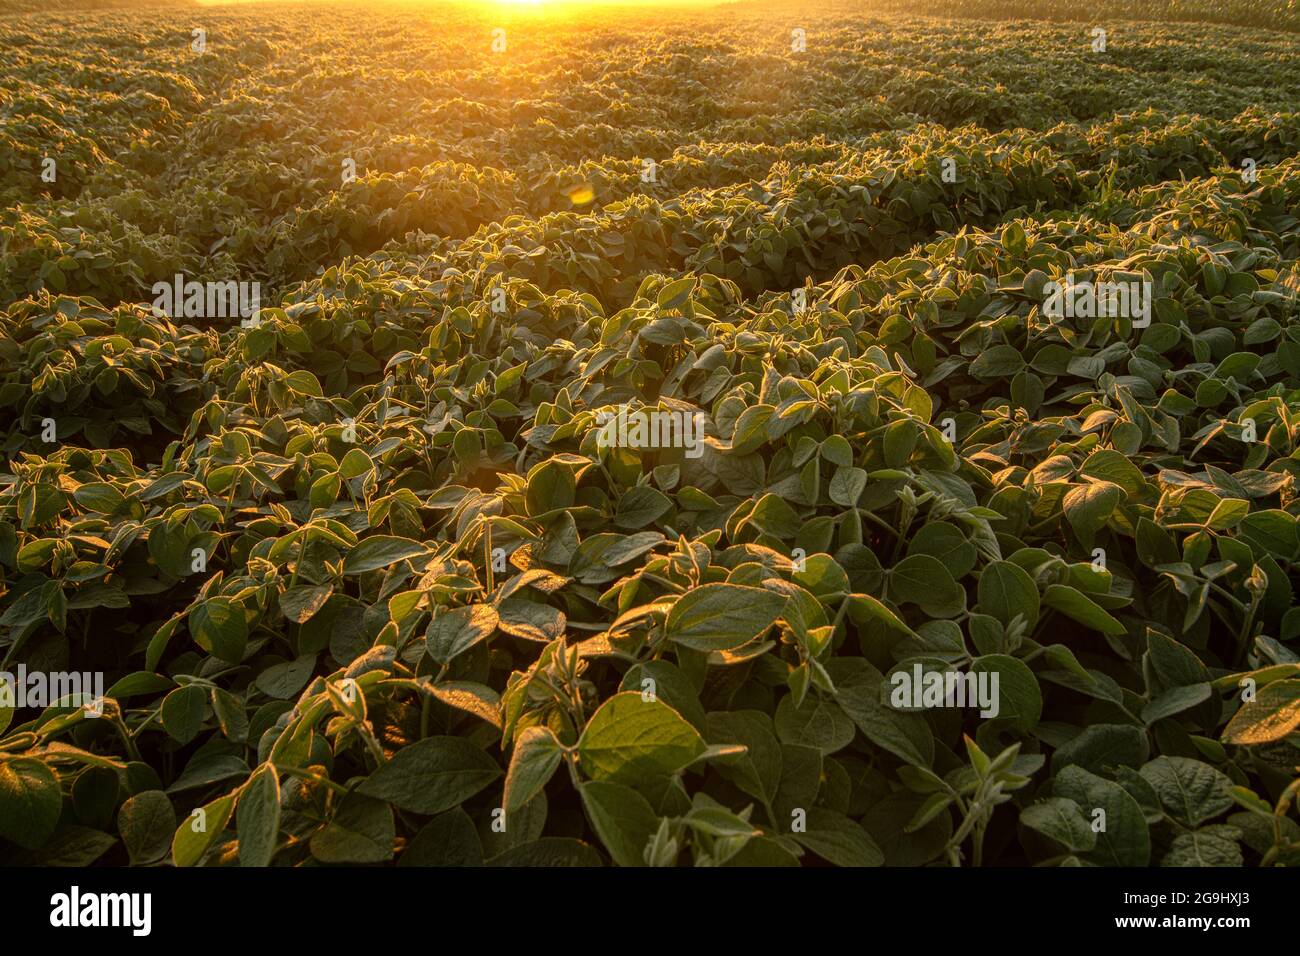 Soy plants growing in a soy field, lit by early morning sunlight Stock Photo